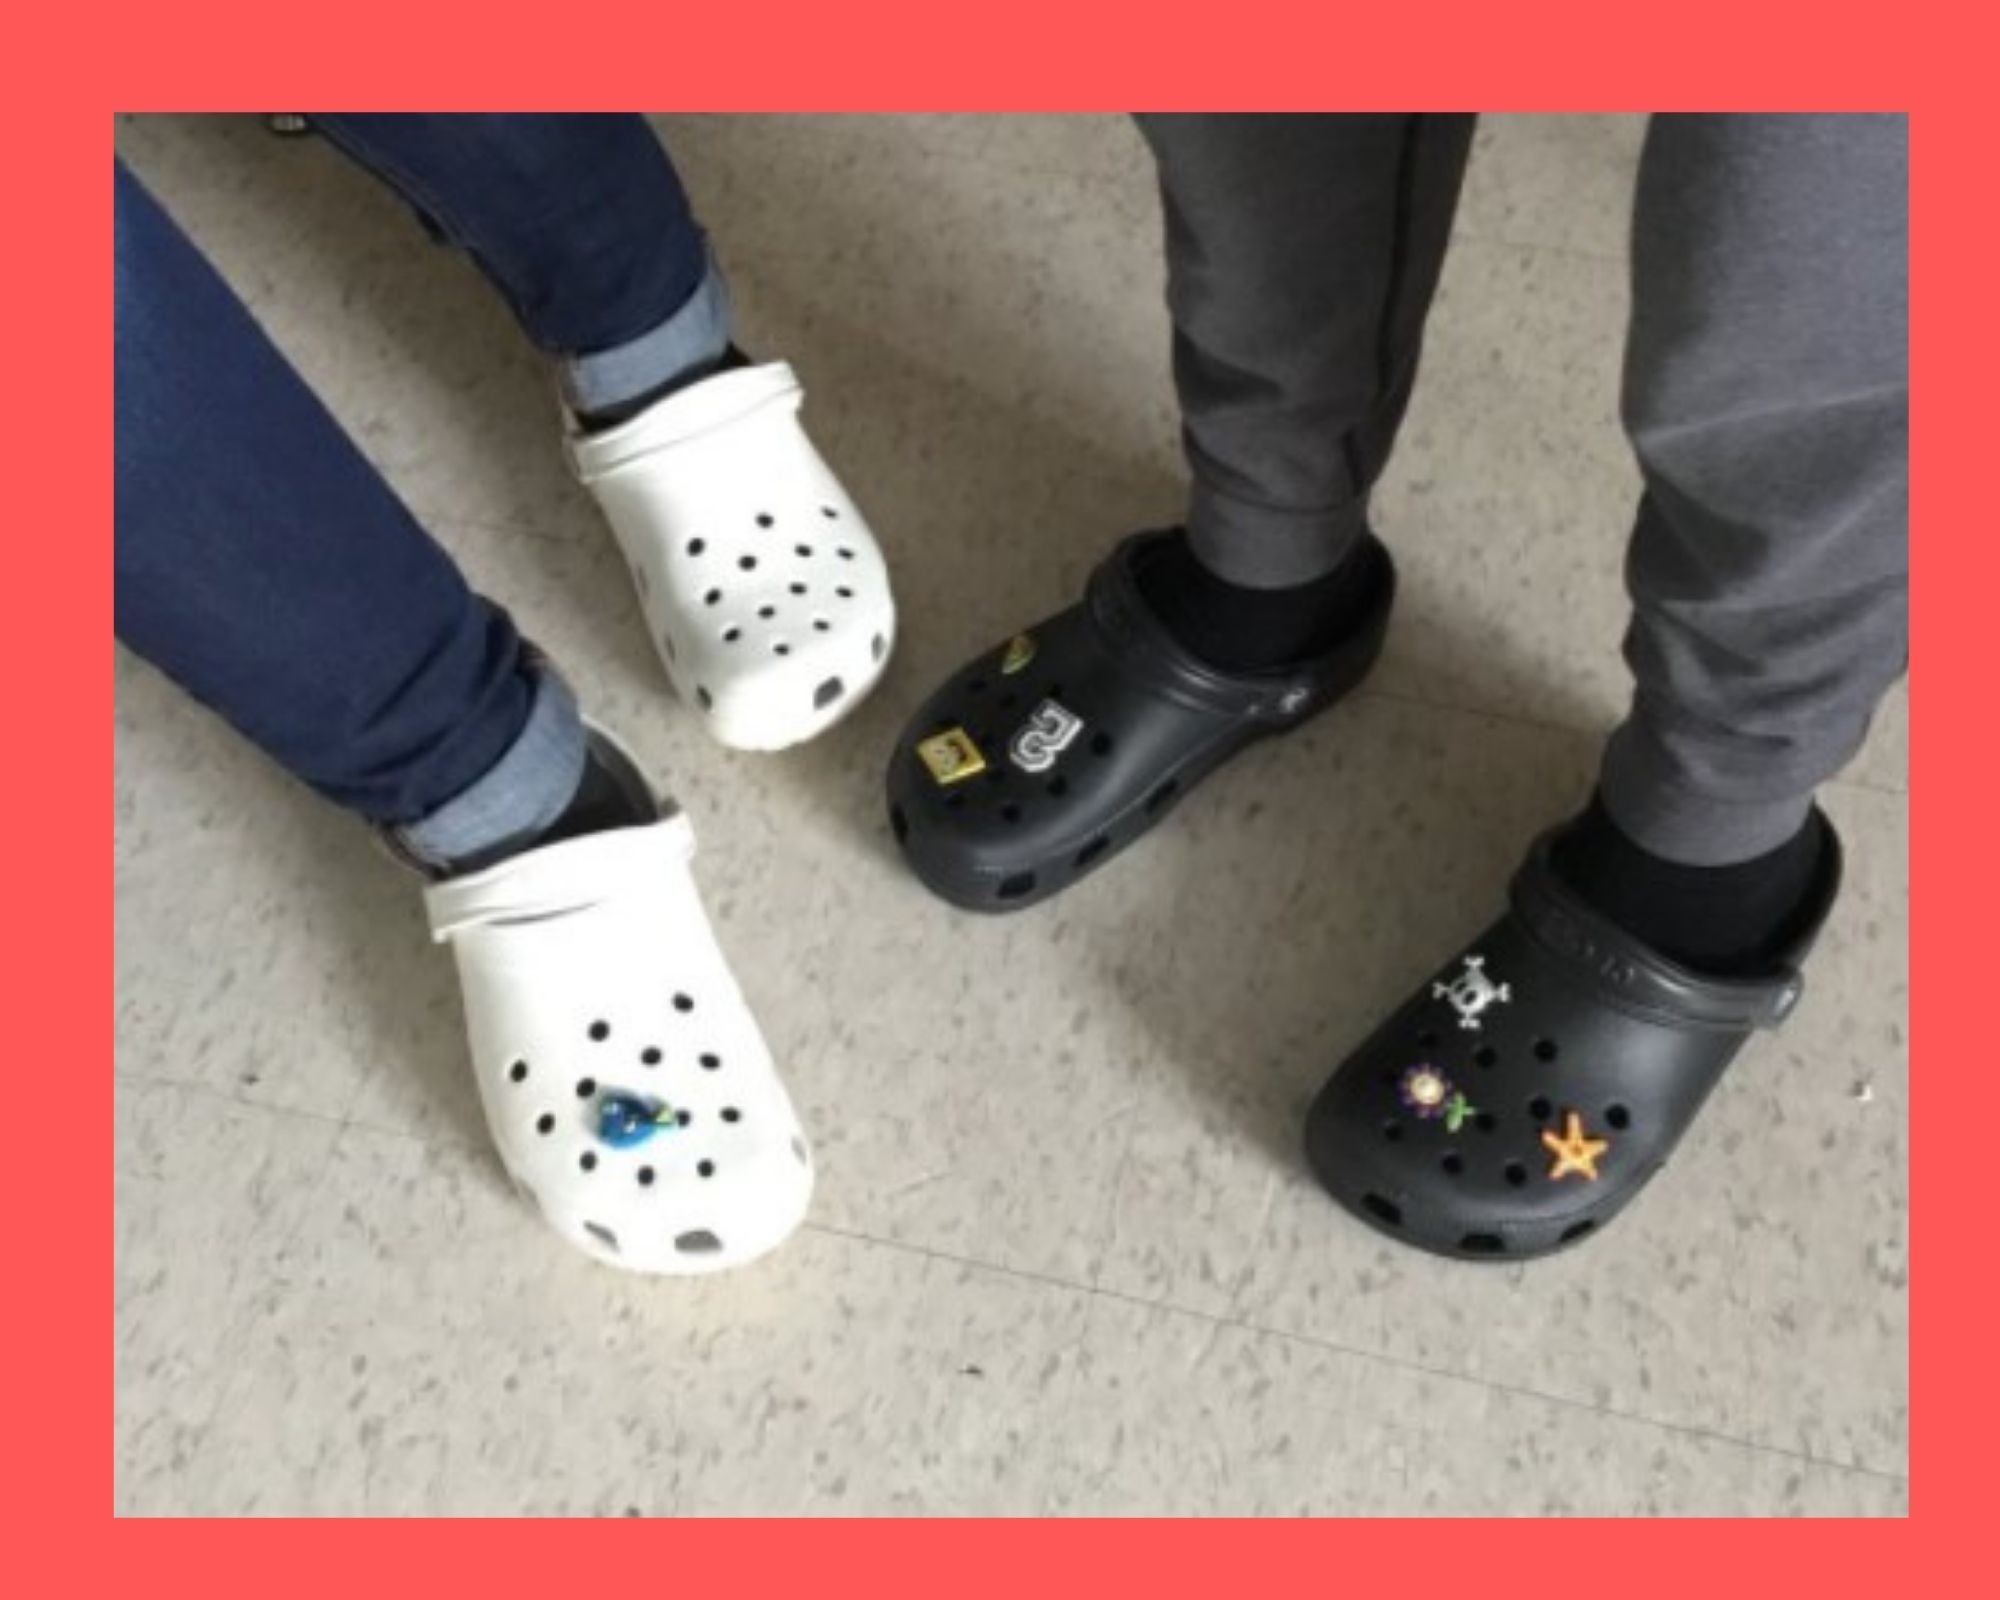  How to wear socks with crocs?